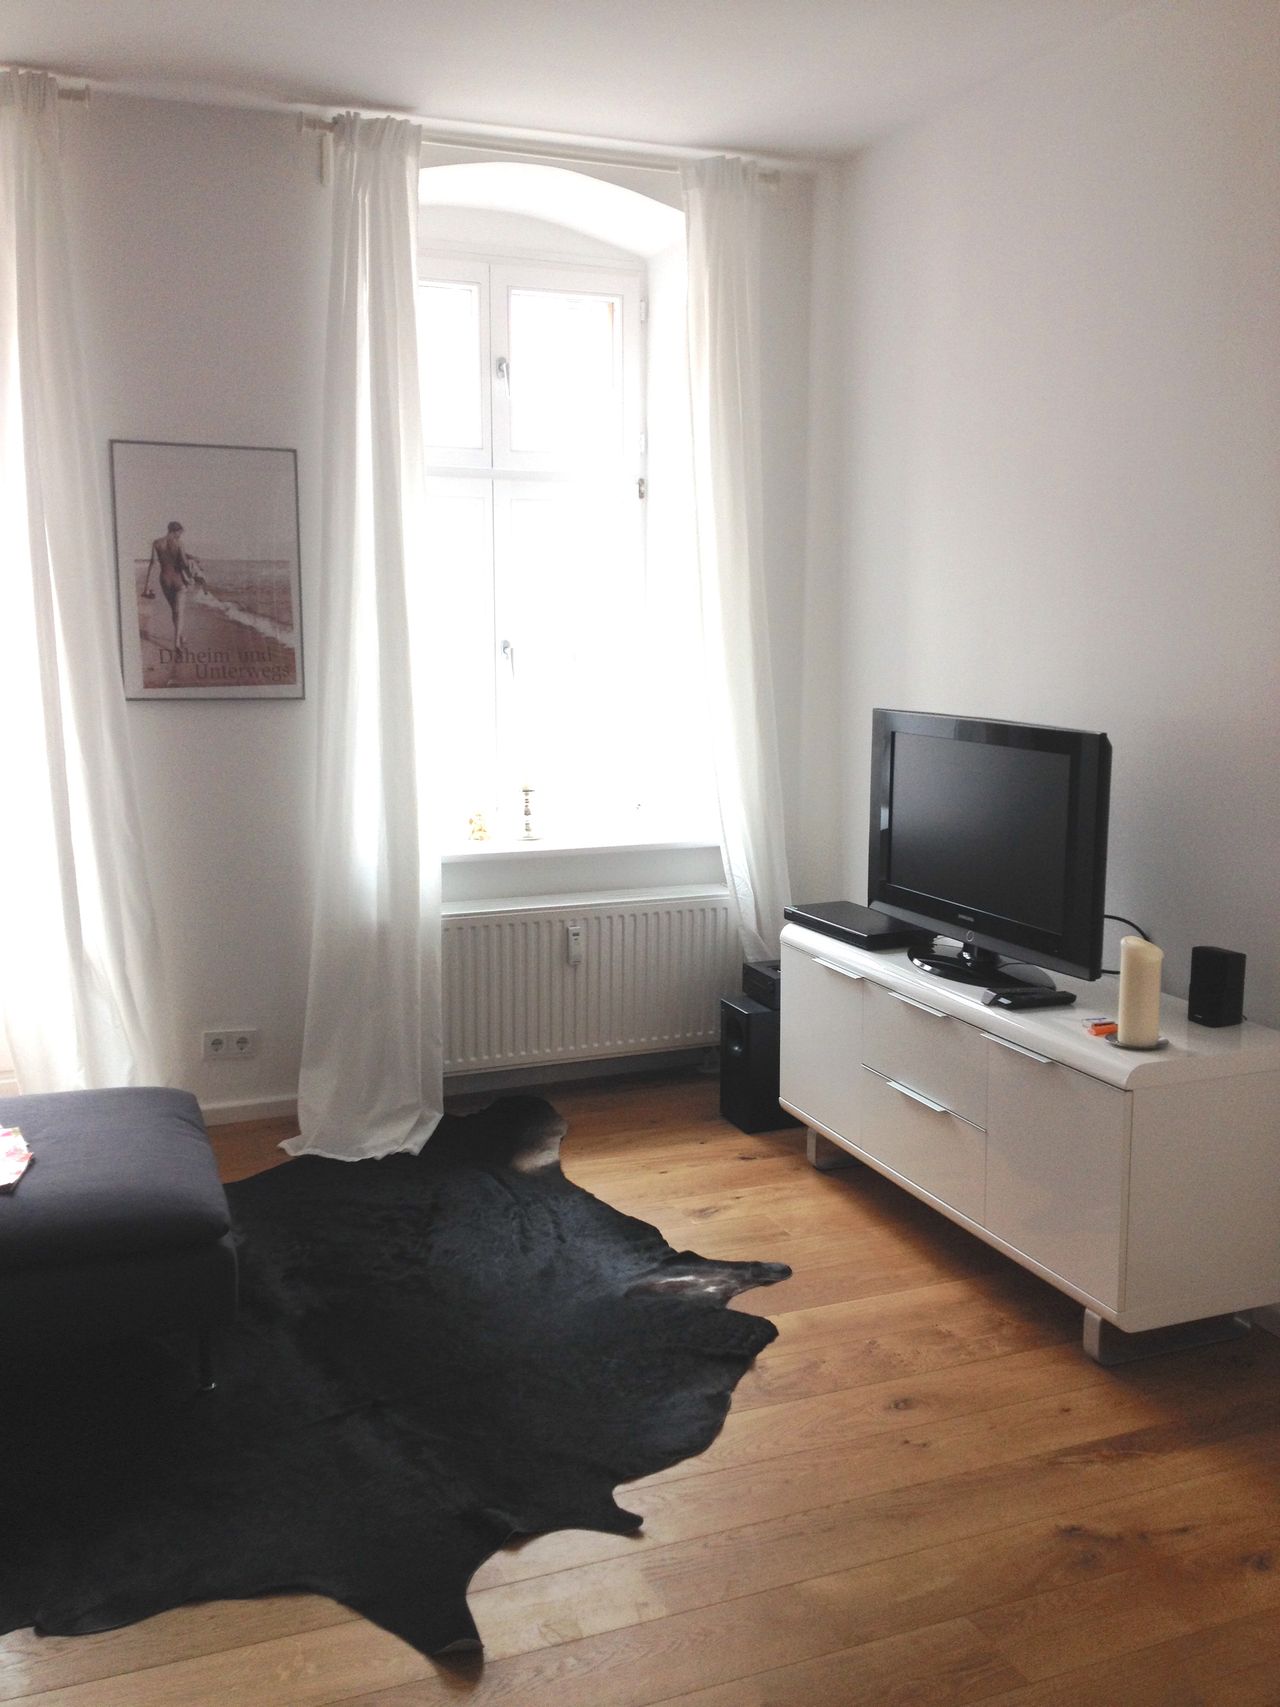 Bright 2-room apartment in Mitte/Prenzlauer Berg